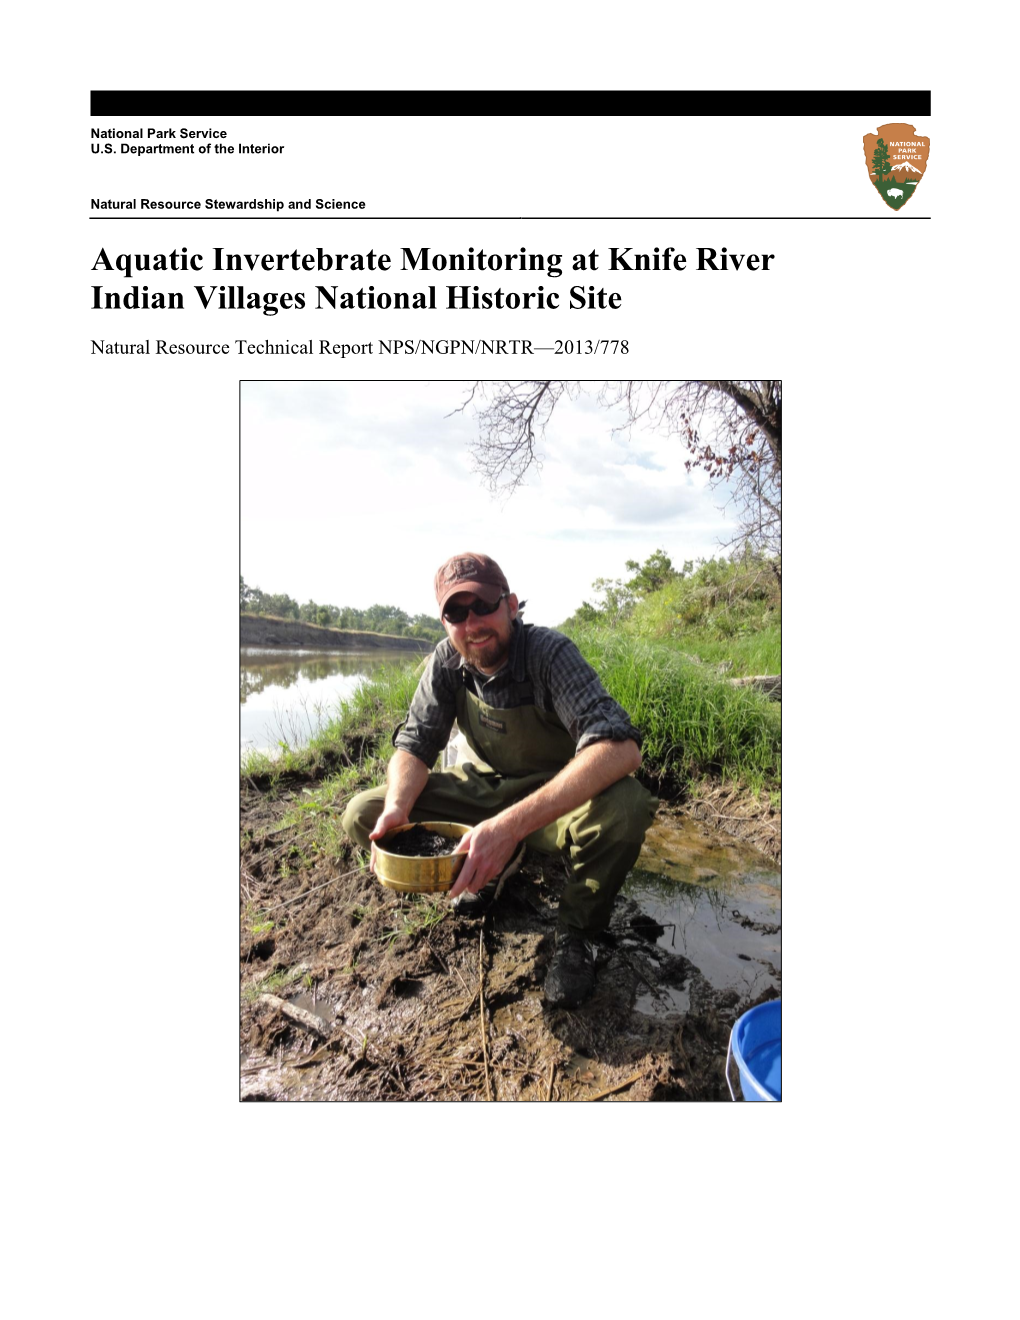 Aquatic Invertebrate Monitoring at Knife River Indian Villages National Historic Site